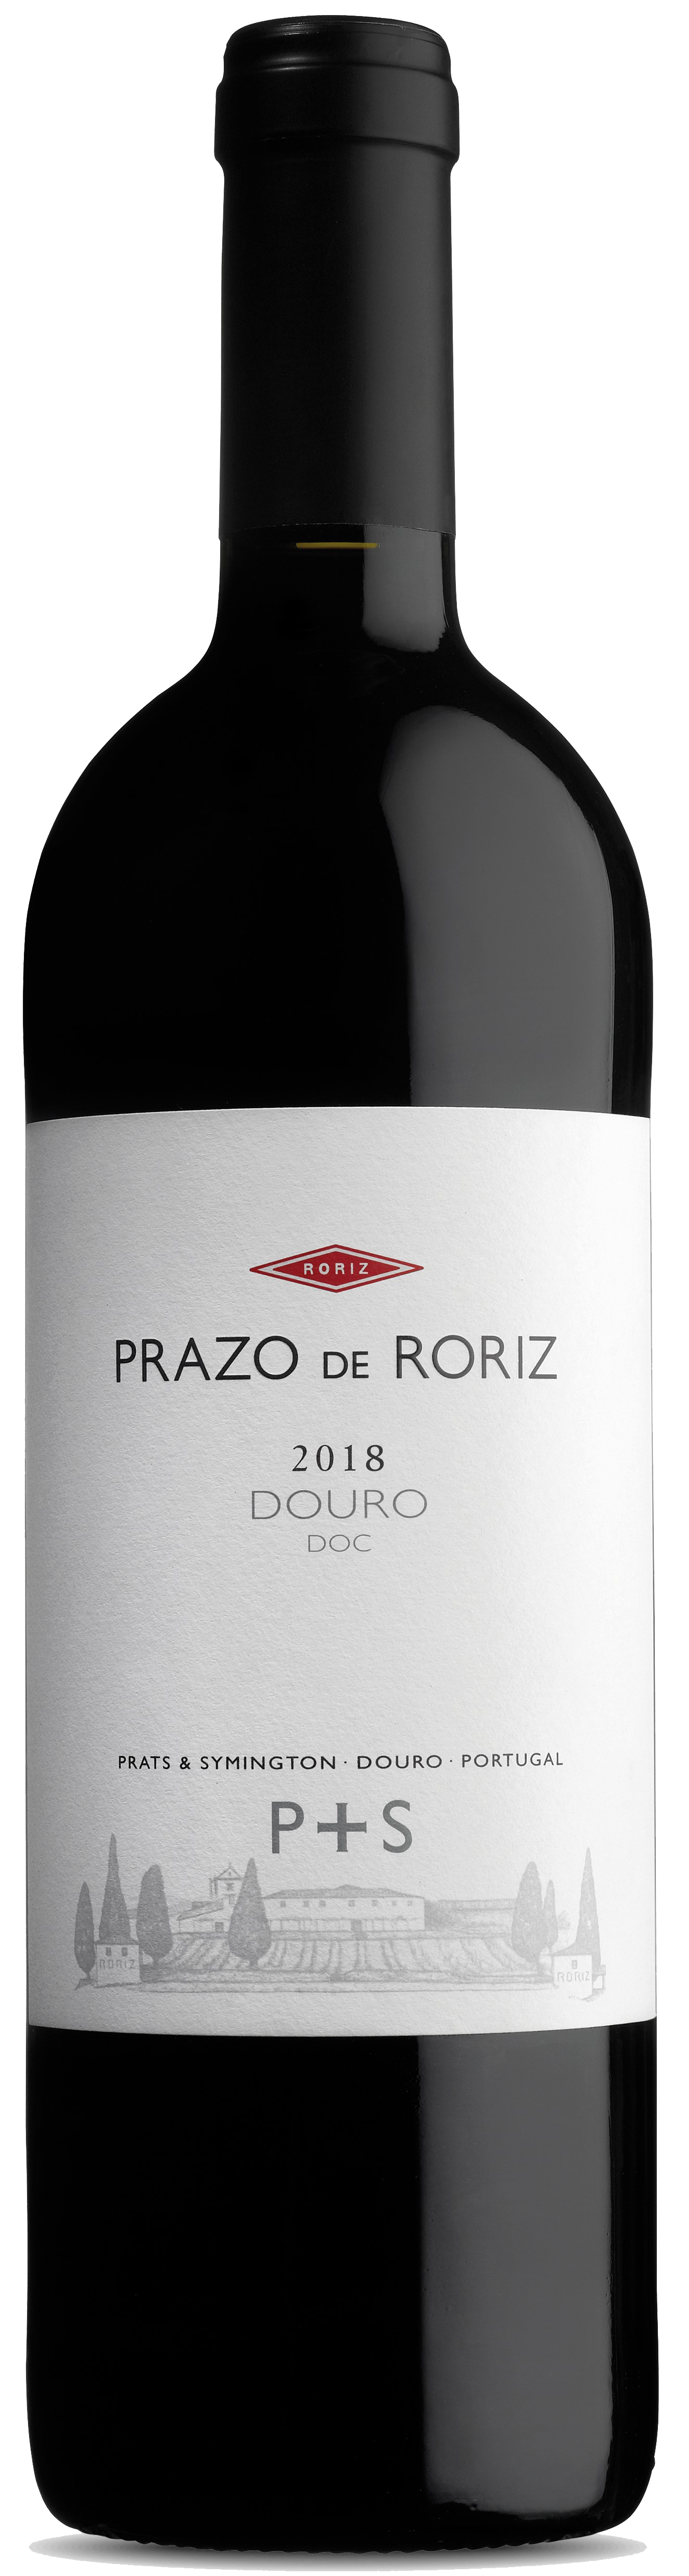 Product Image for P&S PRAZO DE RORIZ DOURO RED 2018